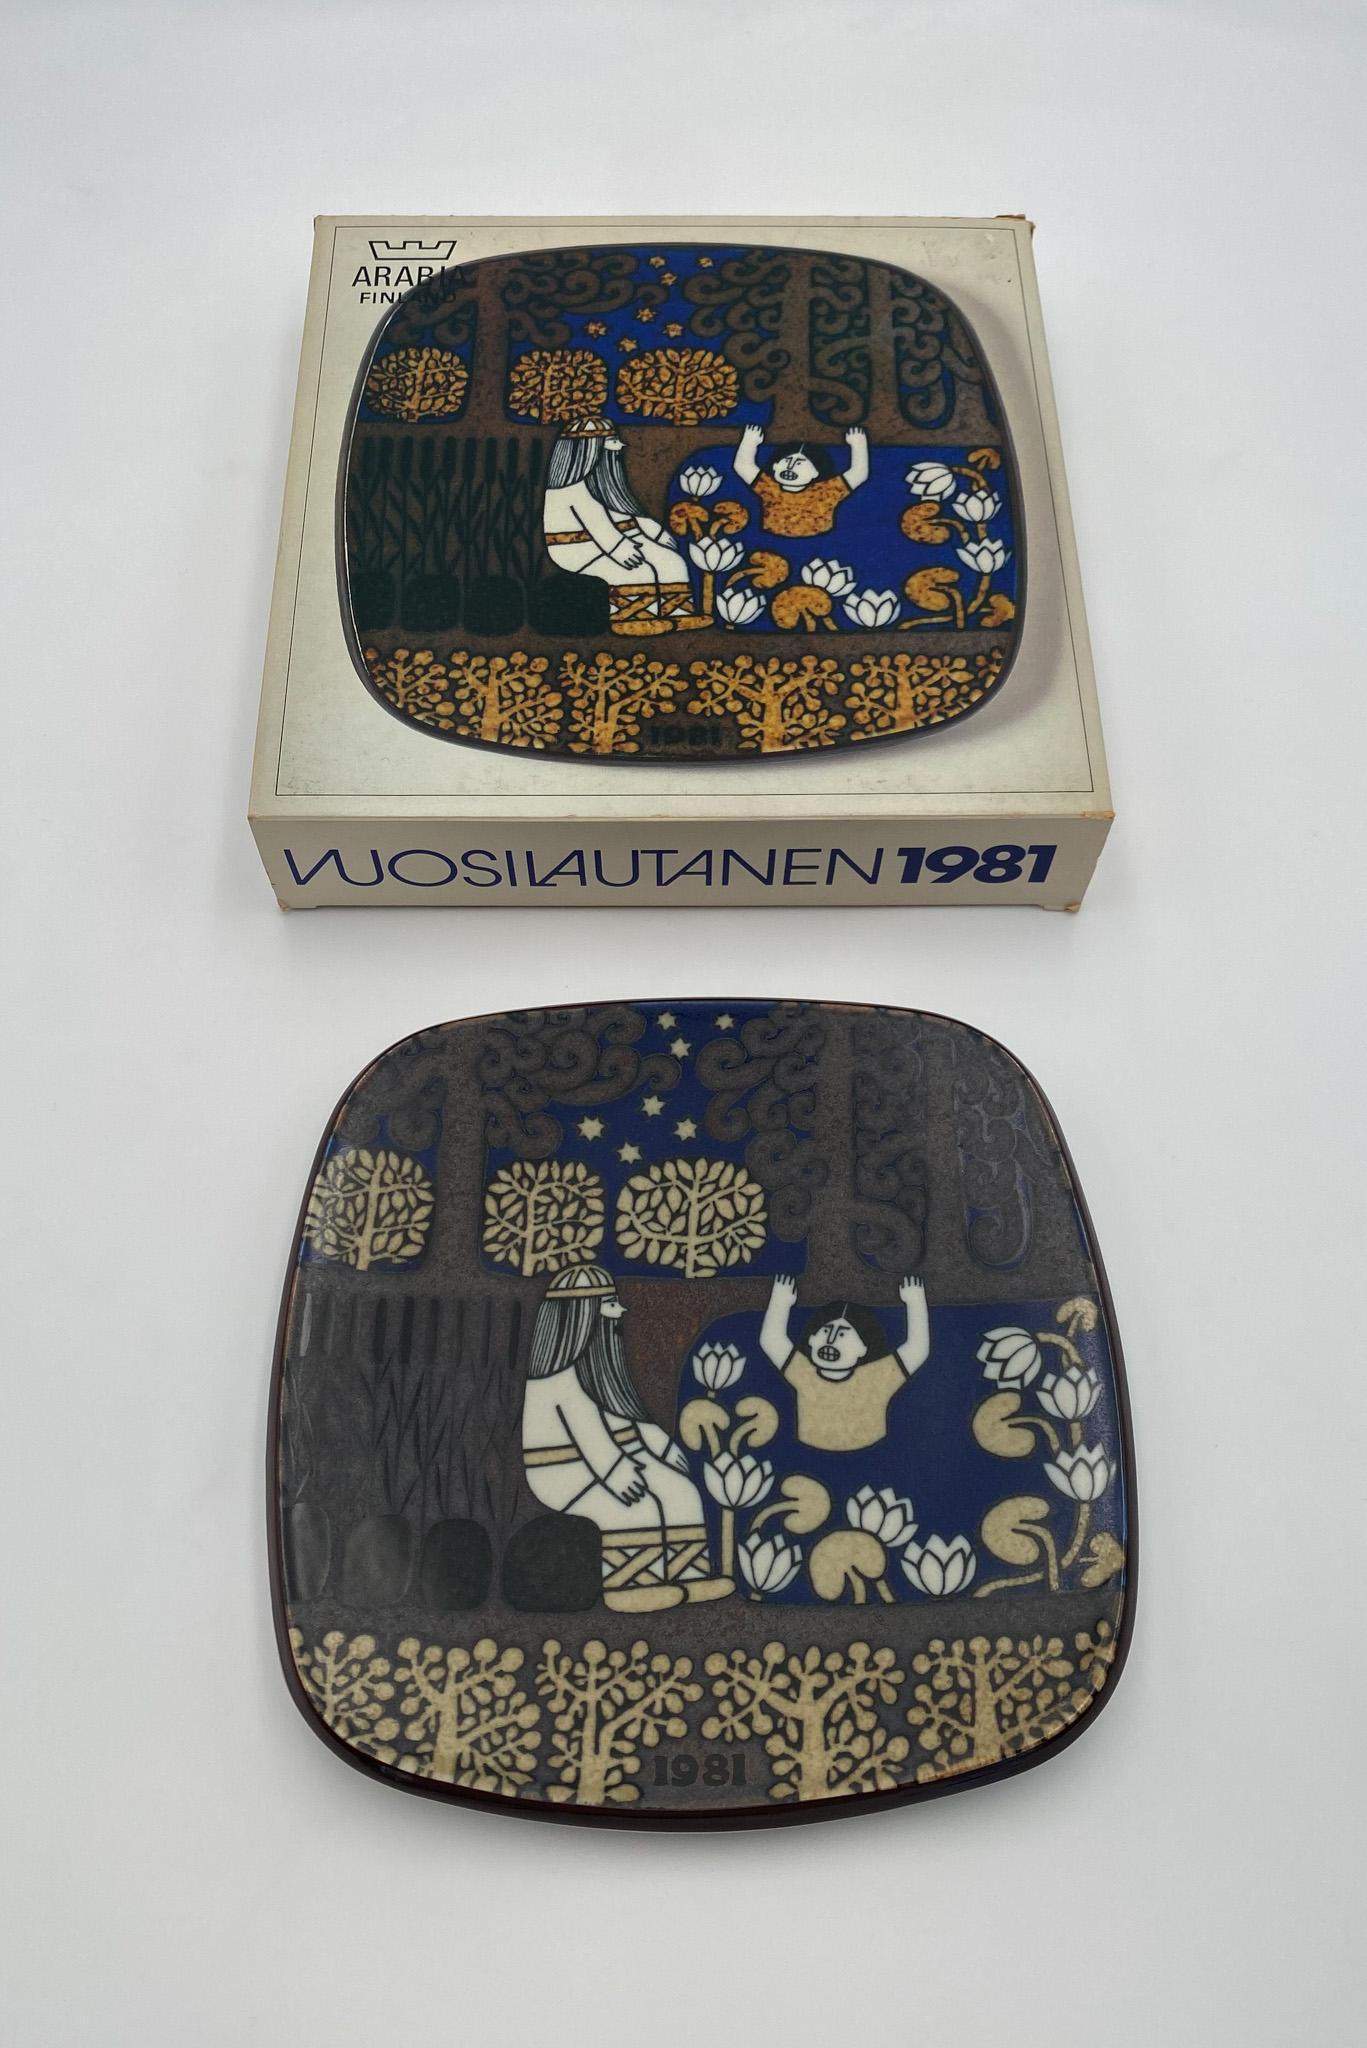 Raija Uosikkinen Decorative Plate for Arabia of Finland, 1981.  Retains the original box.  